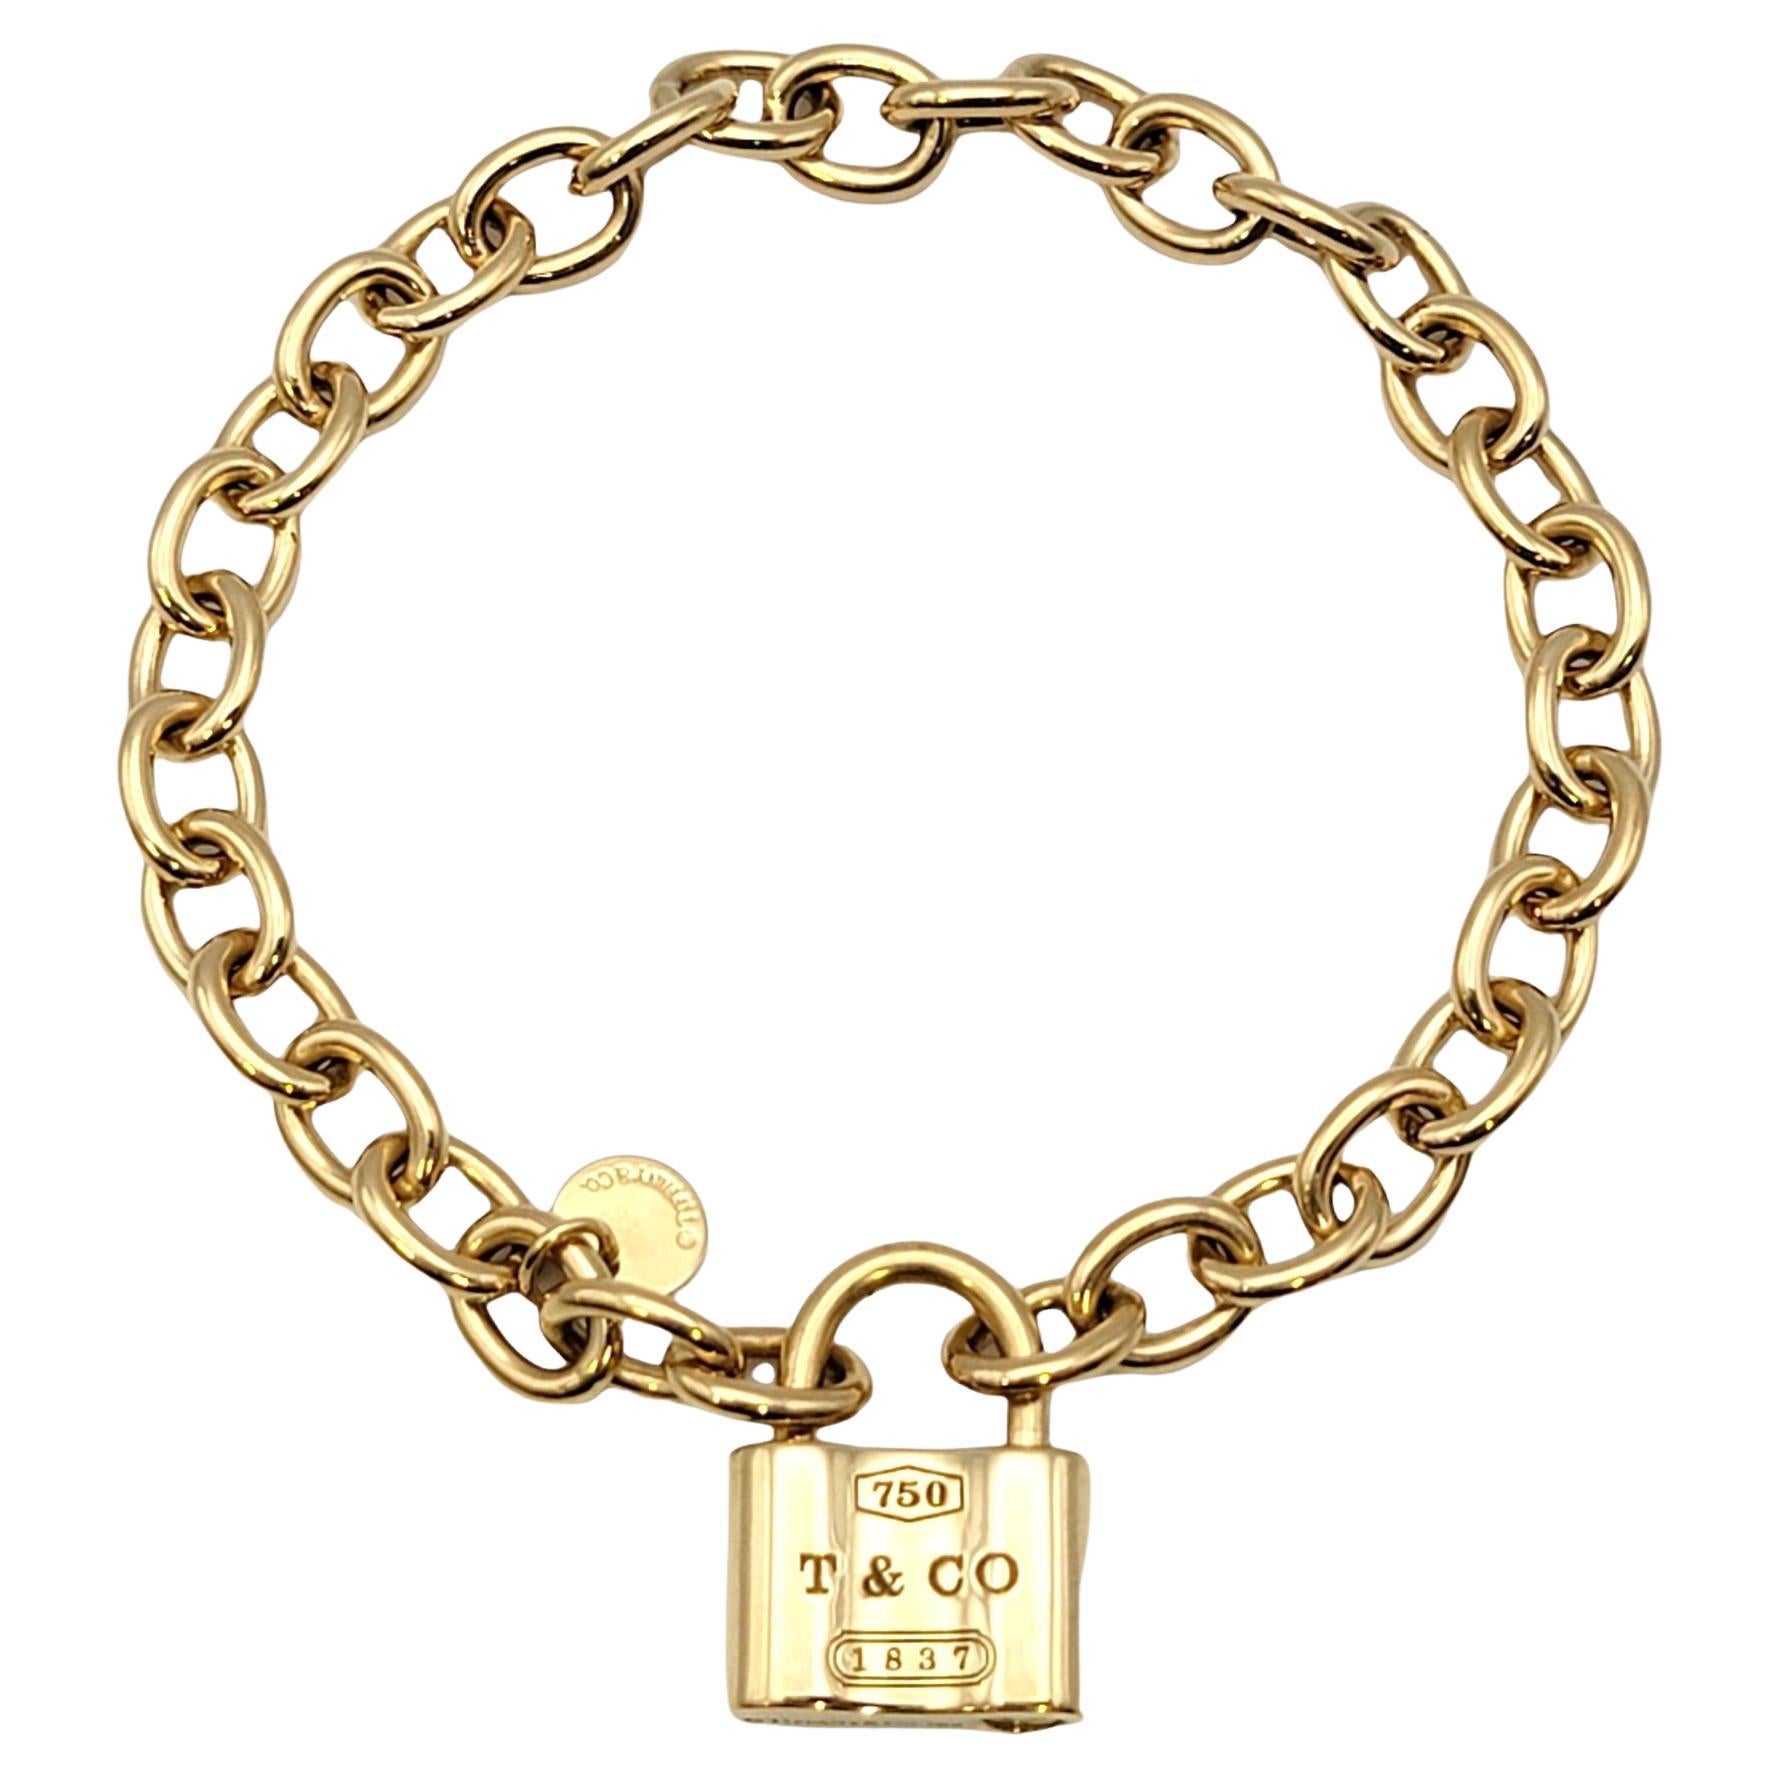 Tiffany & Co. 1837 Lock Circle Chain Link Bracelet in 18 Karat Yellow Gold